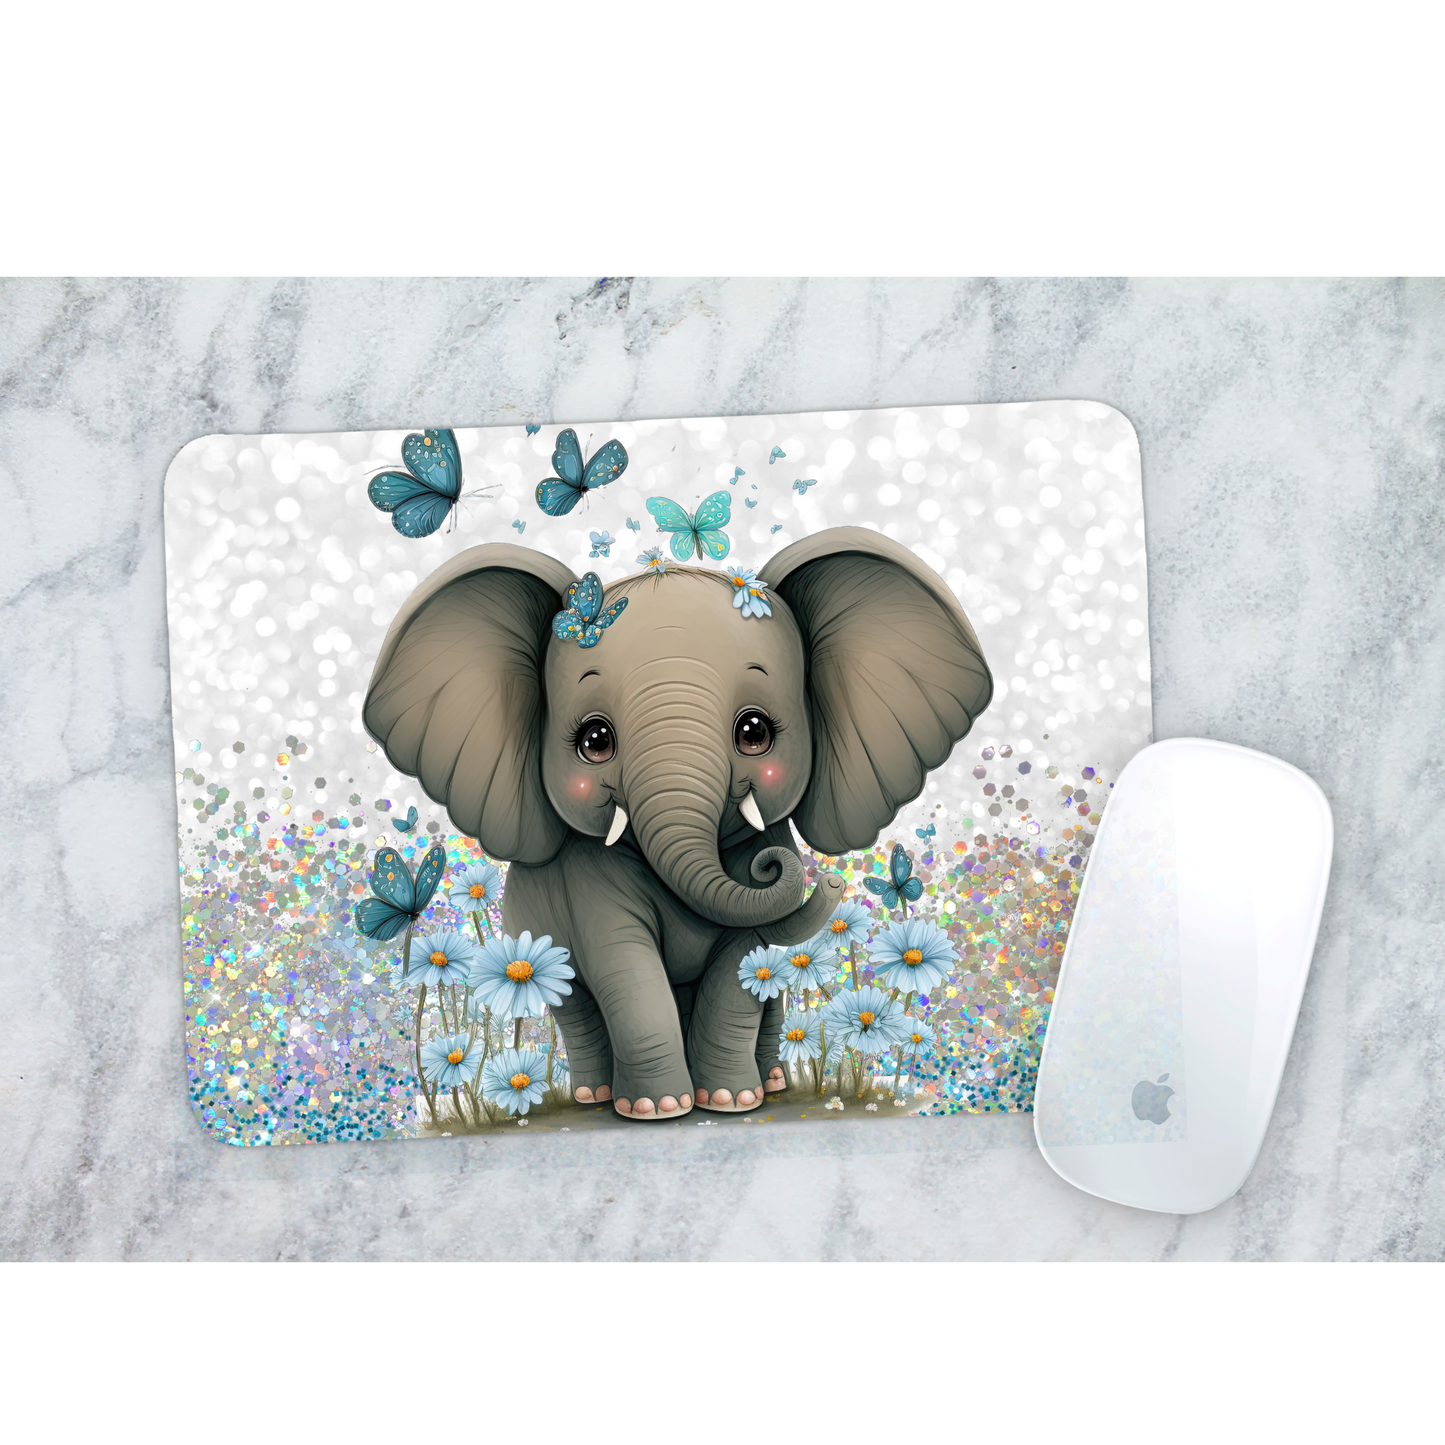 Premium Printed Anti-Slip Mouse Mat - Ultra Durable Baby Elephant Design